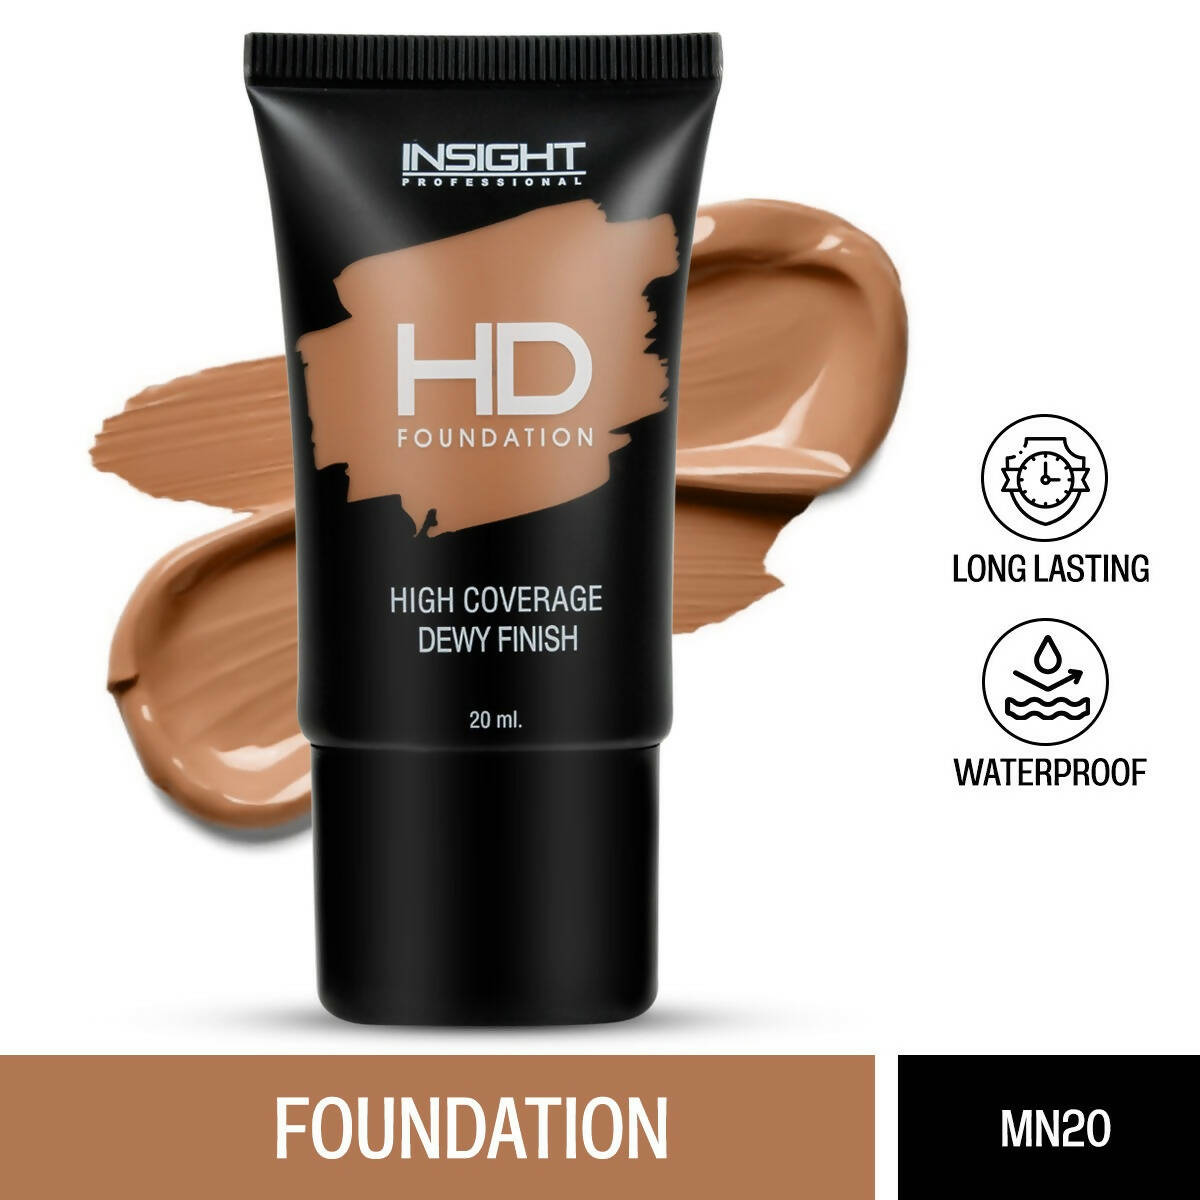 Insight Cosmetics HD Foundation - MN 20